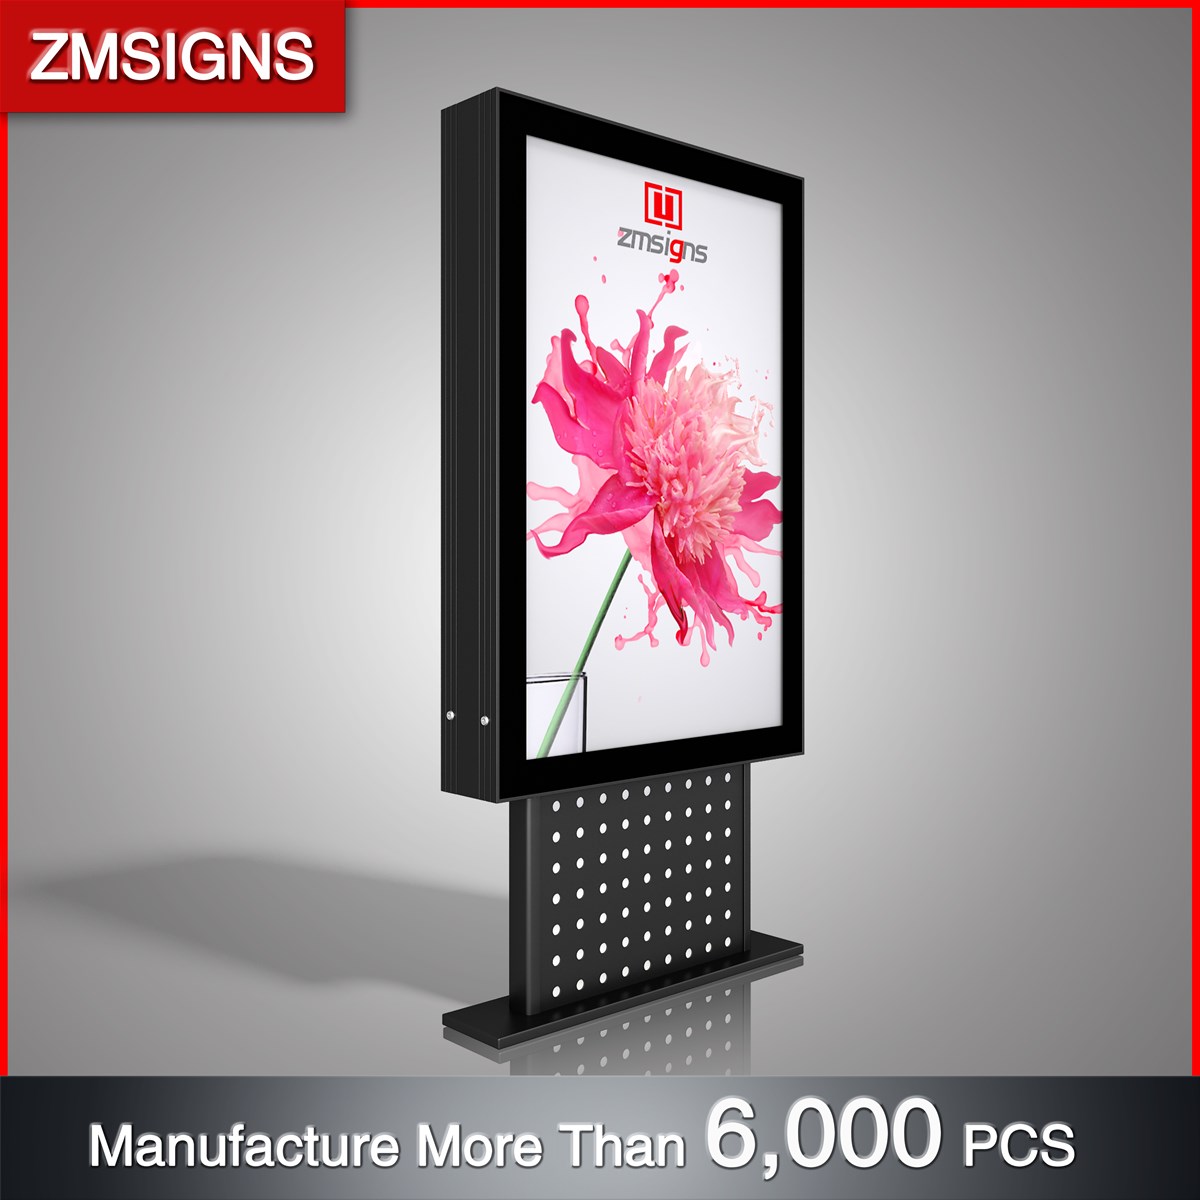 ZM208 solar powered outdoor advertising LED light box ZMsigns